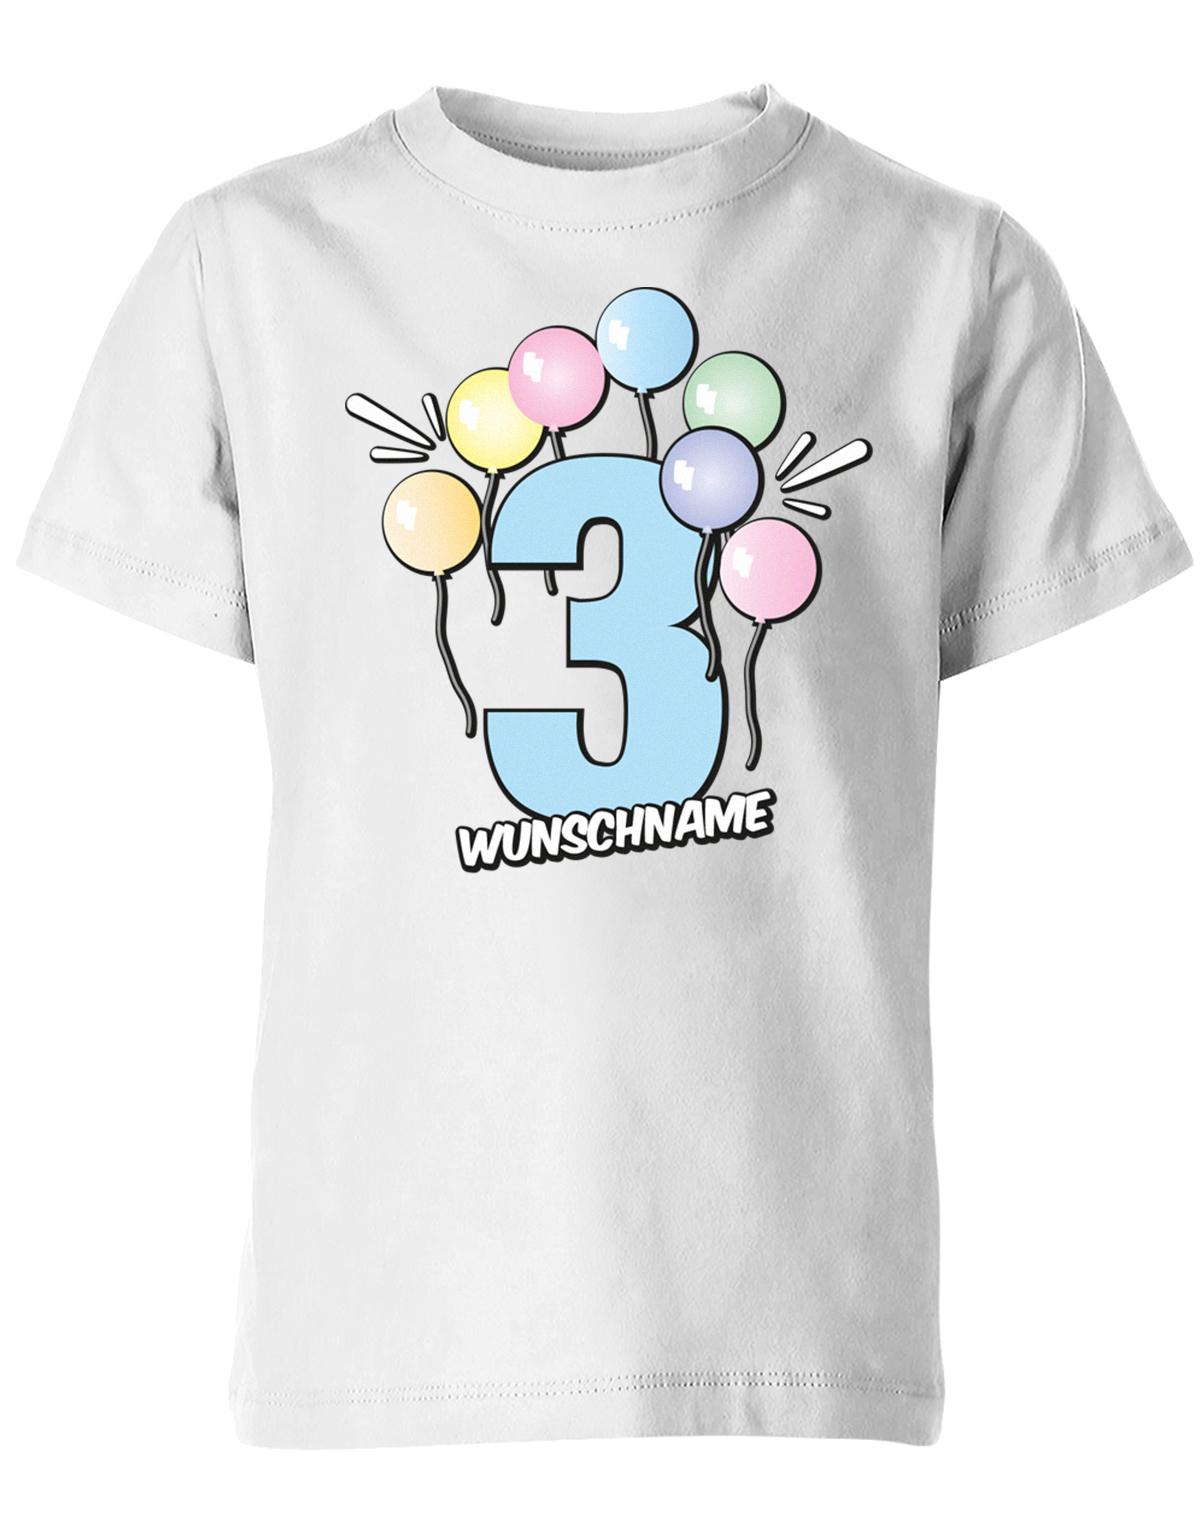 Luftballons-pastell-3-geburtstag-wunschname-kinder-shirt-weiss